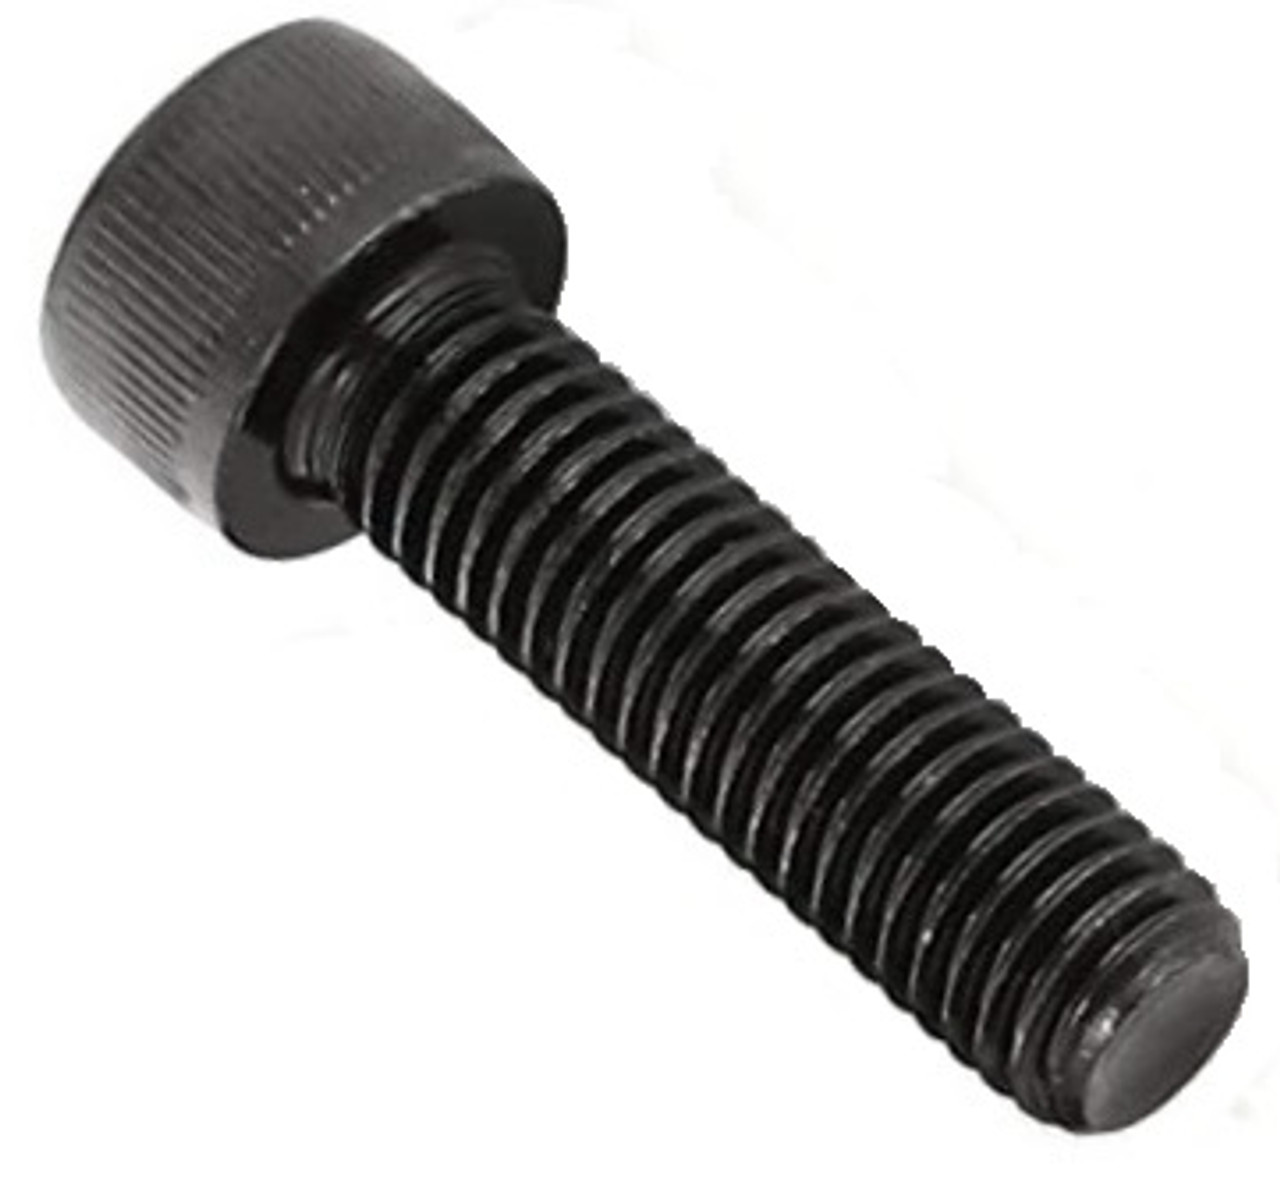 M6-1.00 Metric Socket Head Cap Screw - Black Oxide  532072 - 532578